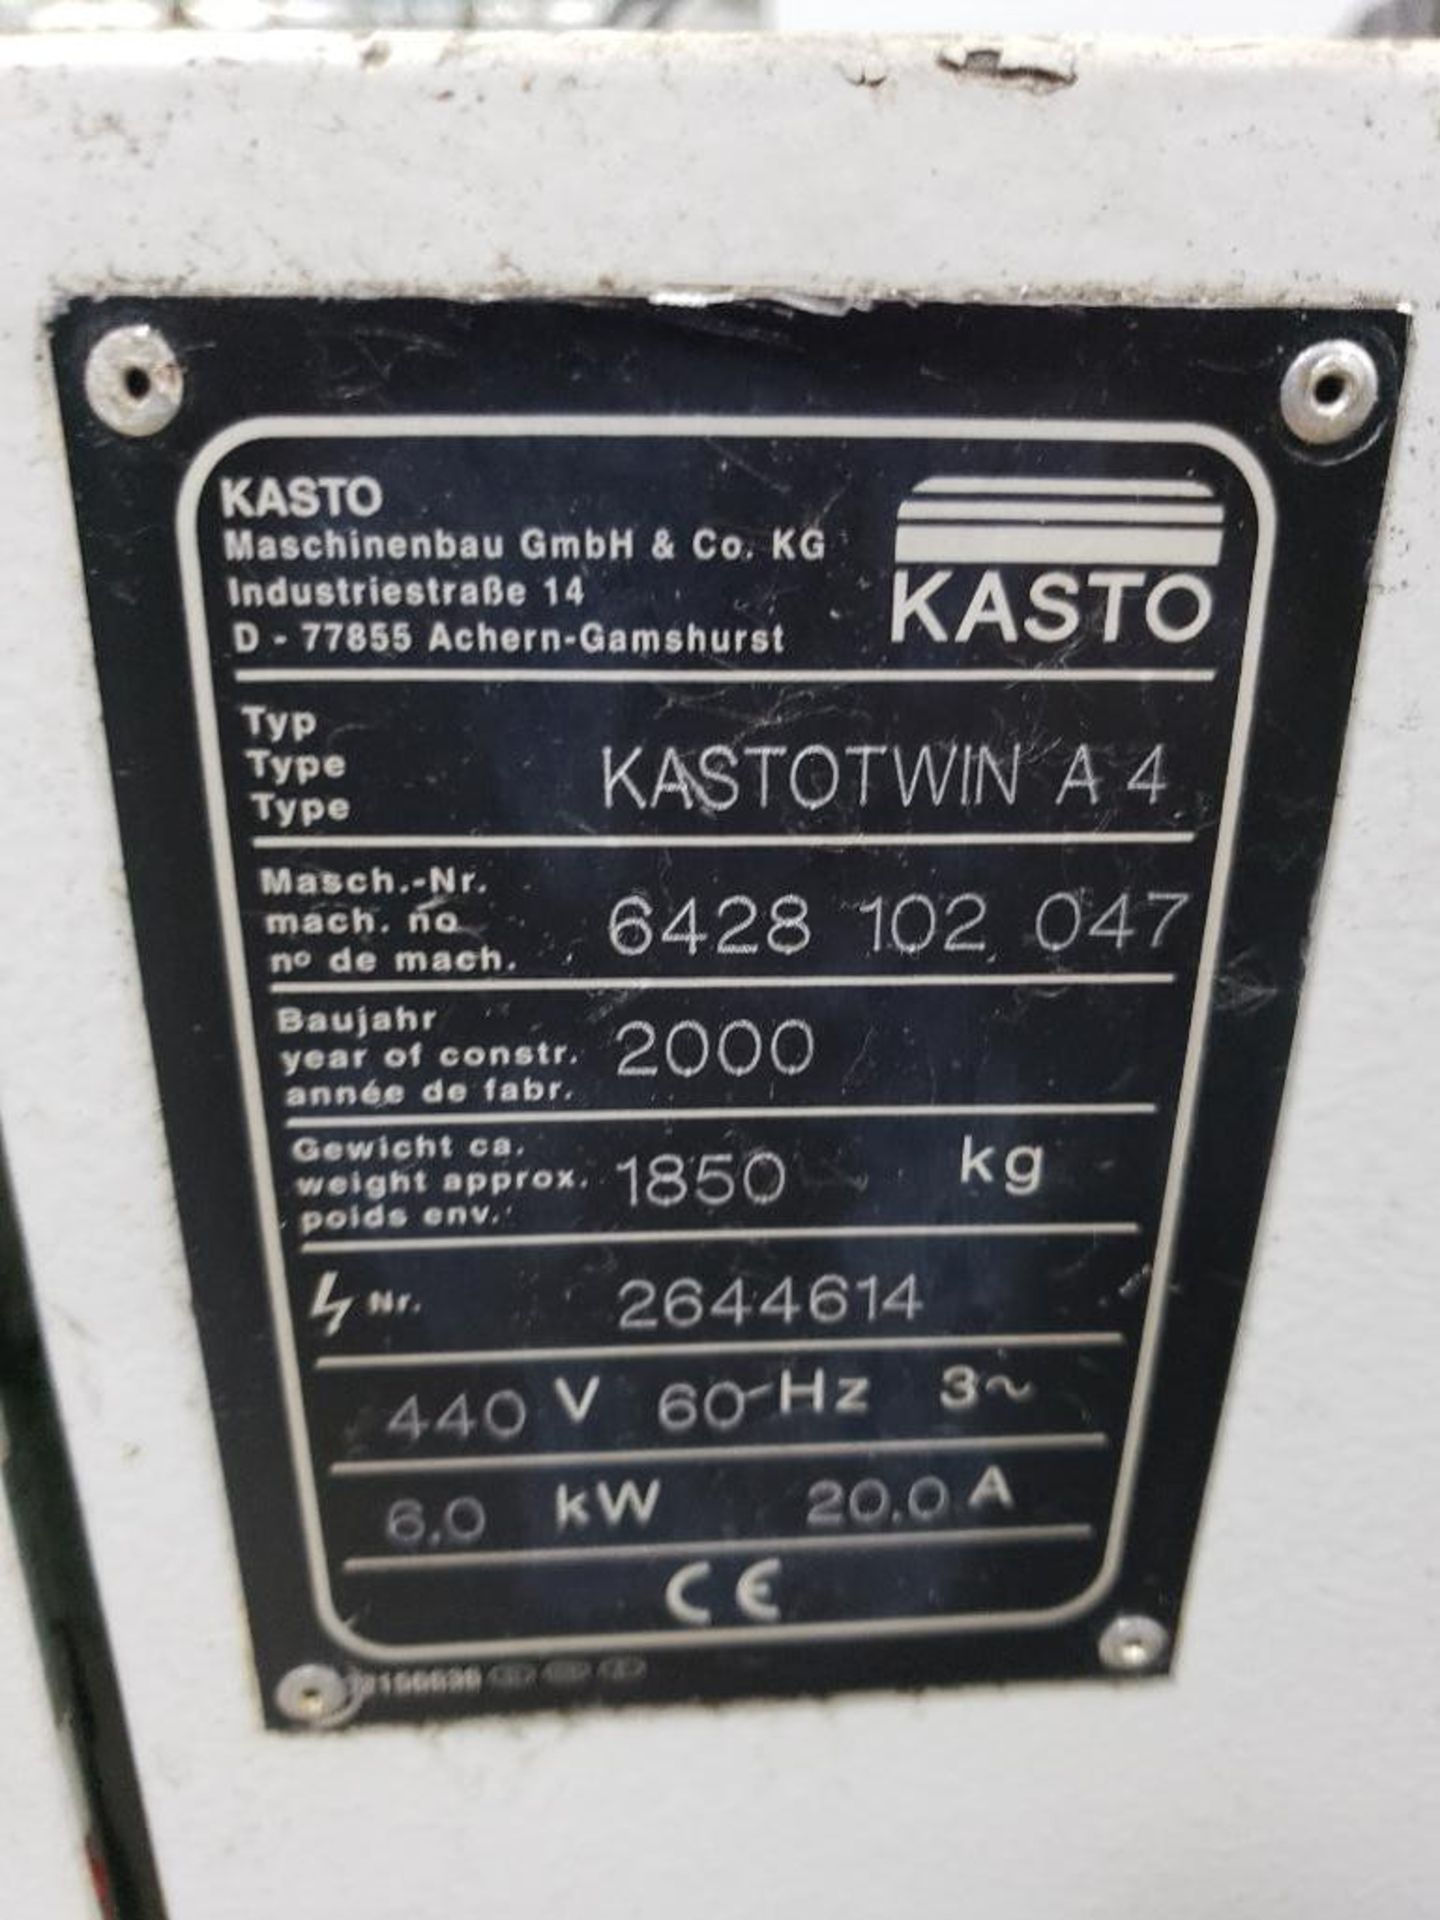 Kasto horizontal CNC band saw Model Kastotwin A4, 3 phase 440v, Mfg year 2000. Serial # 6428102047. - Bild 20 aus 32